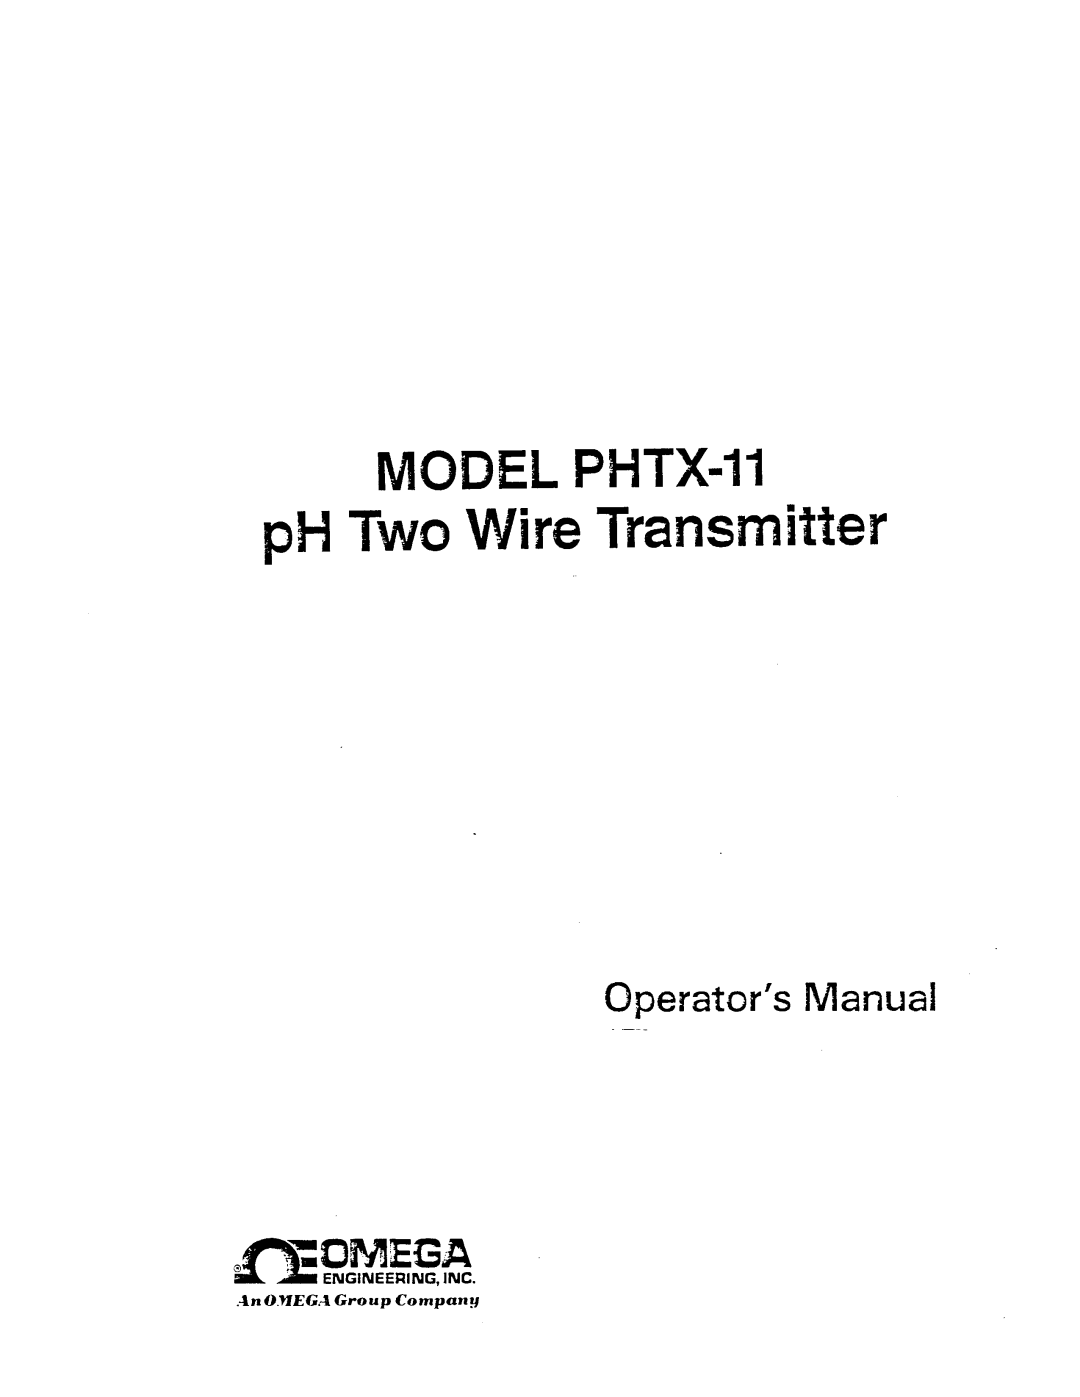 Omega Engineering PHTX-11 manual OjyjEGA, Operator ’s Manual, AnO.VfEG.4 Group Company, Engineering, Inc 